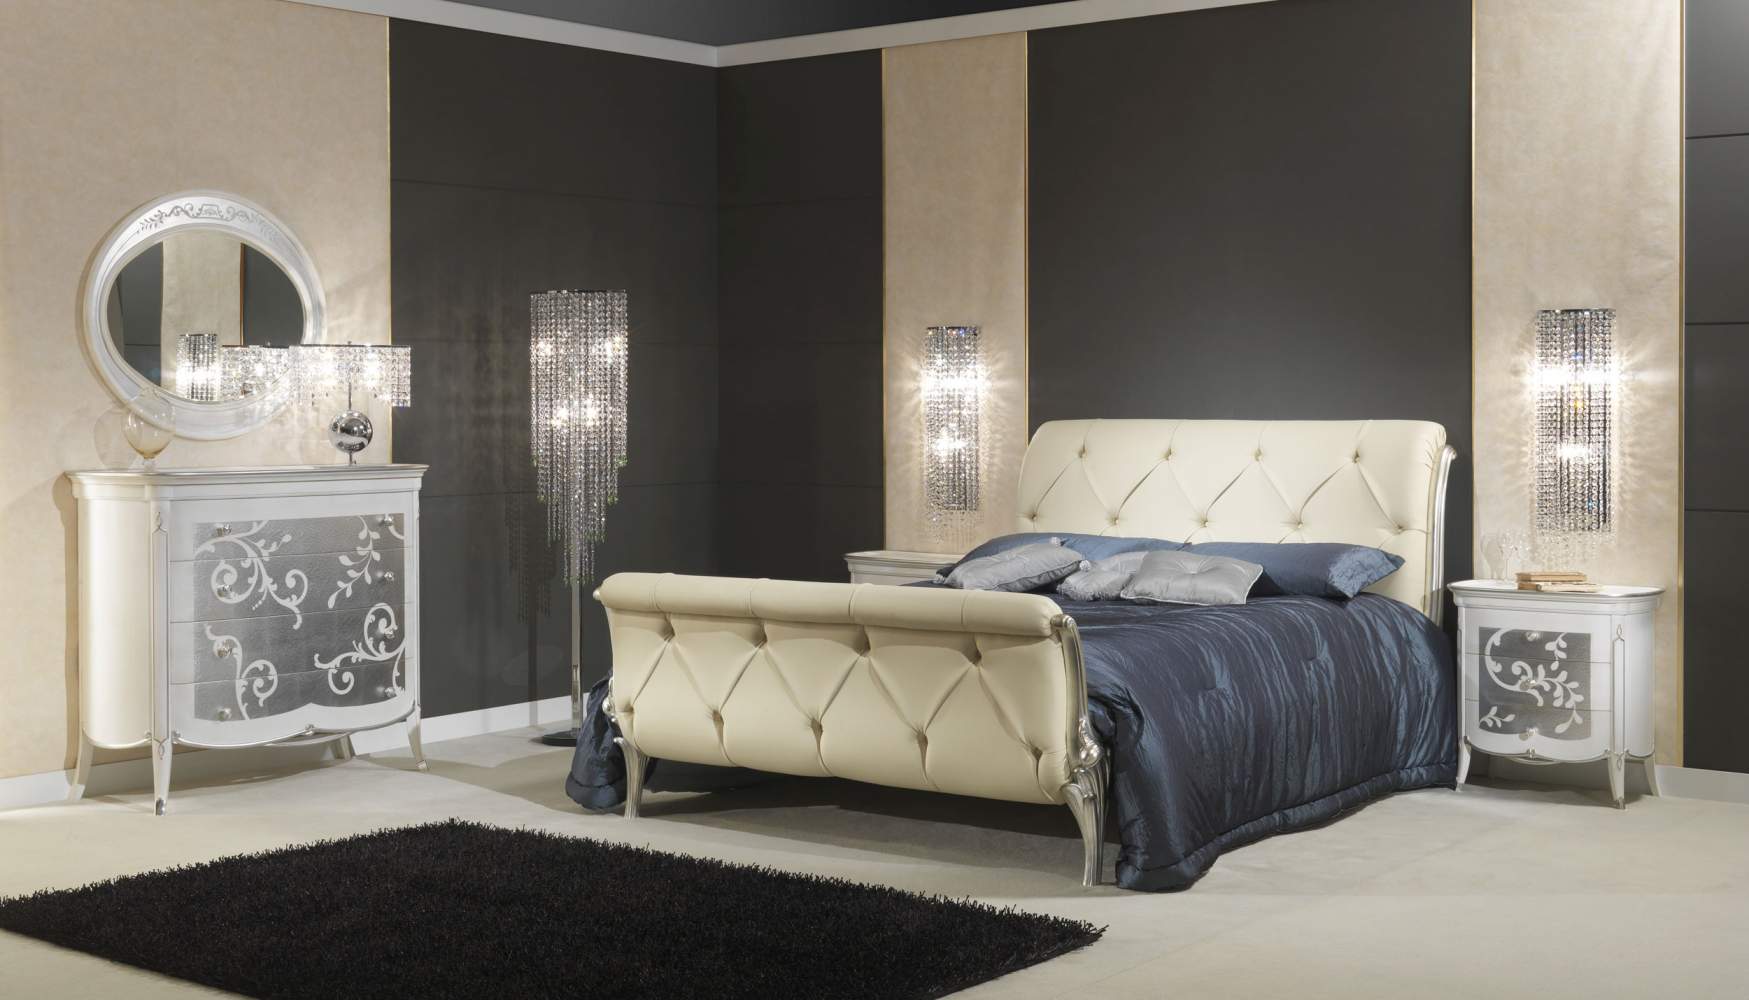 Art Decò style bedroom